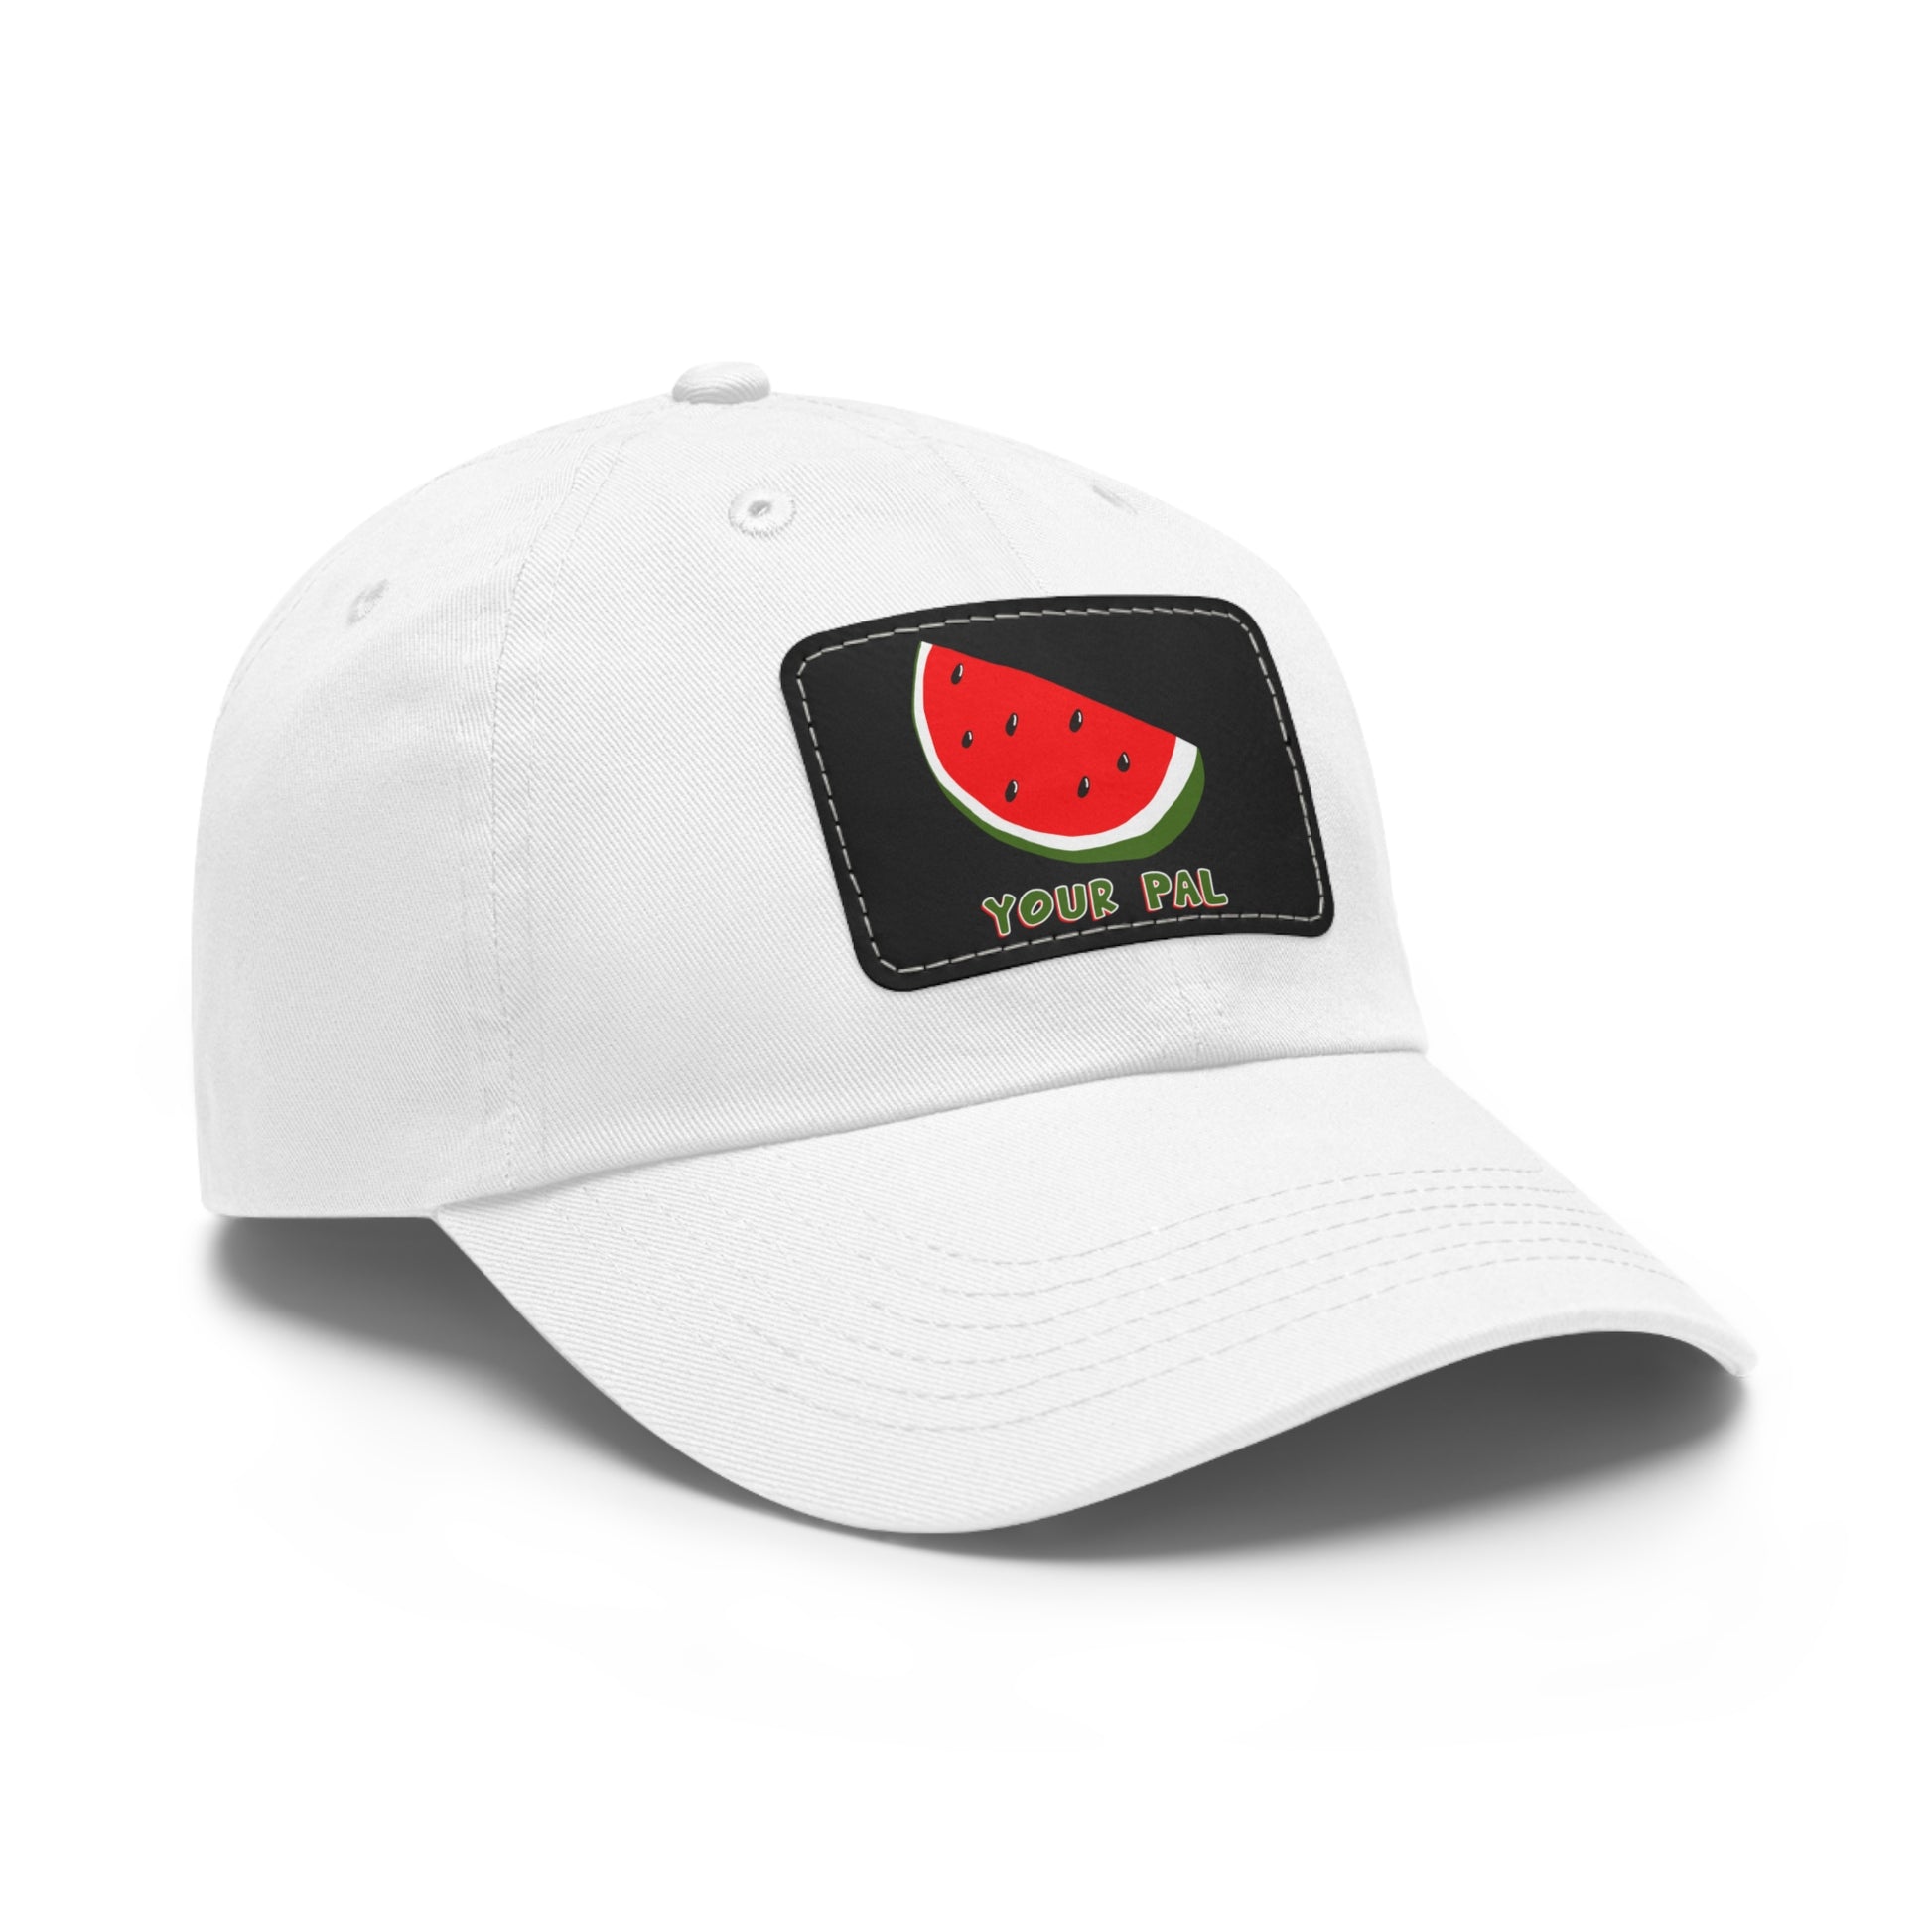 Watermelon Your Pal Hat - Sammy Obeid